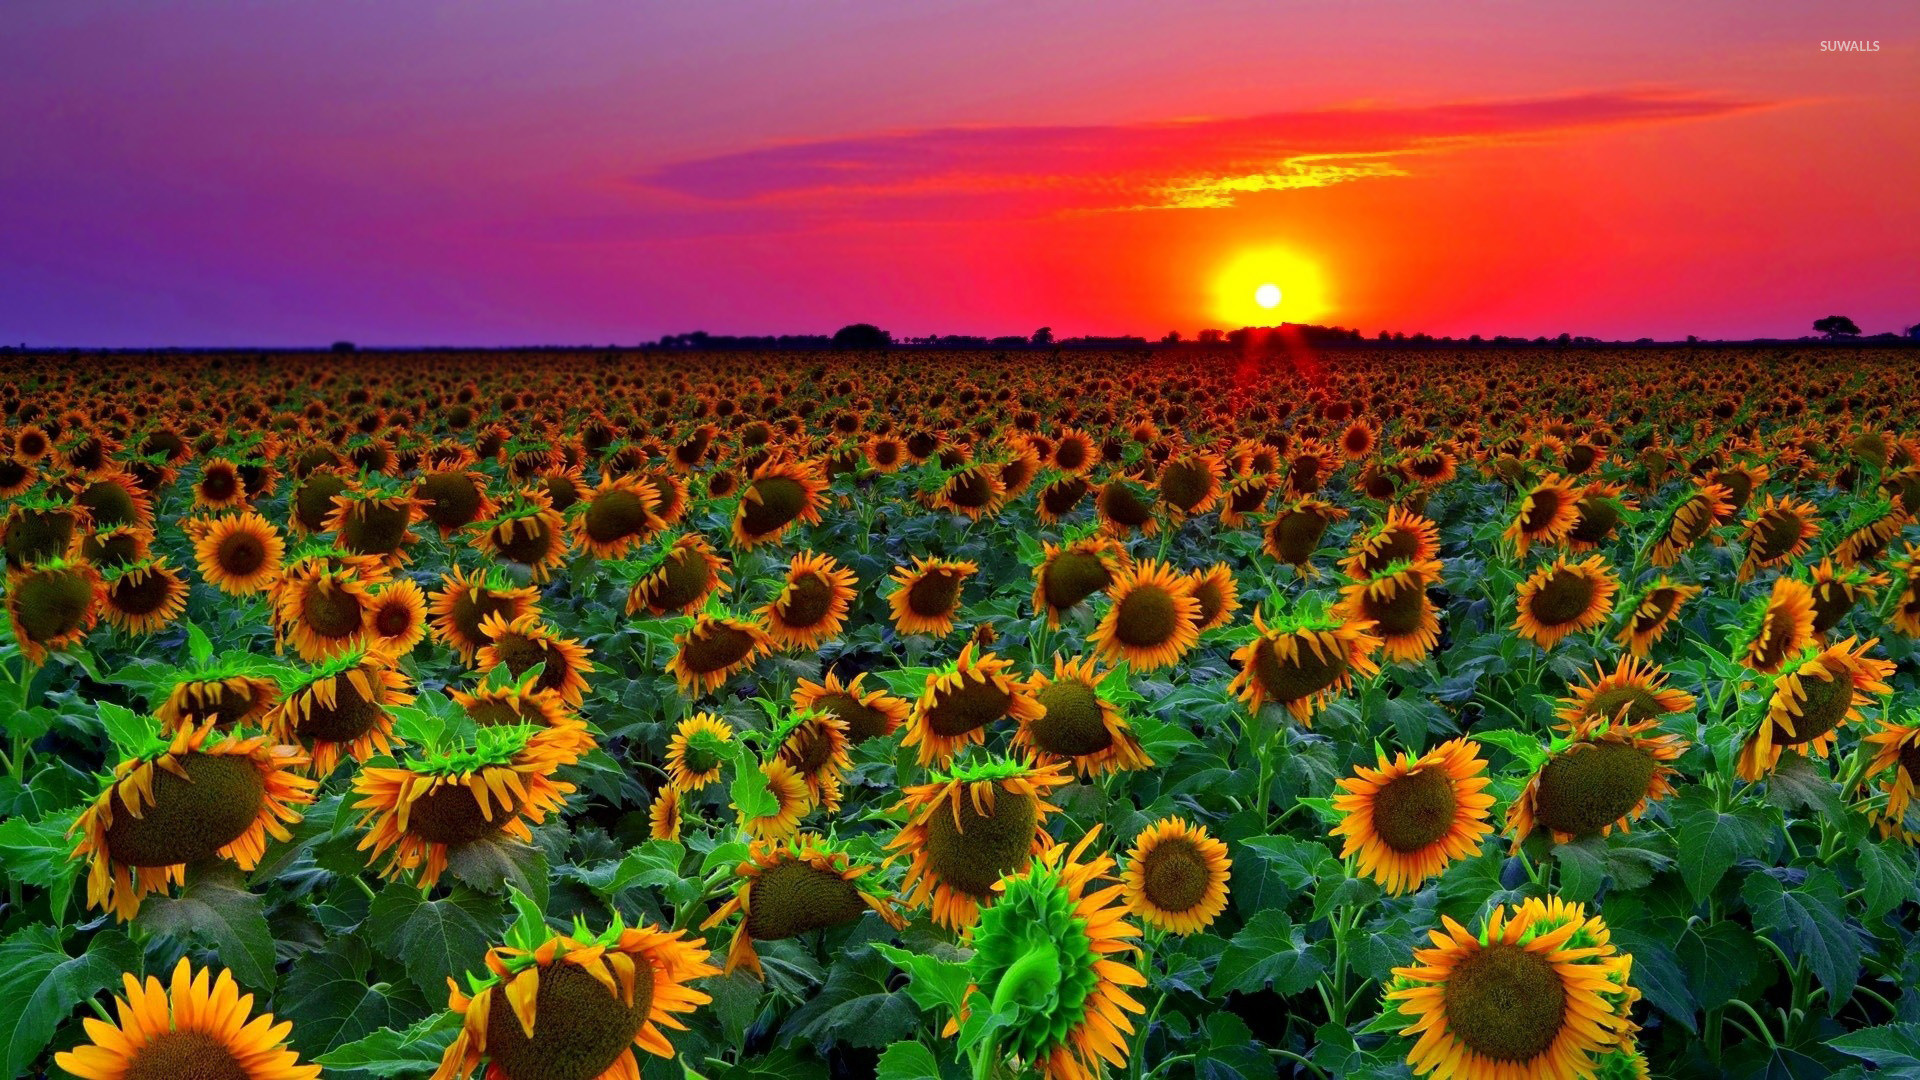 1920x1080 Sunflowers at sunset wallpaper  jpg